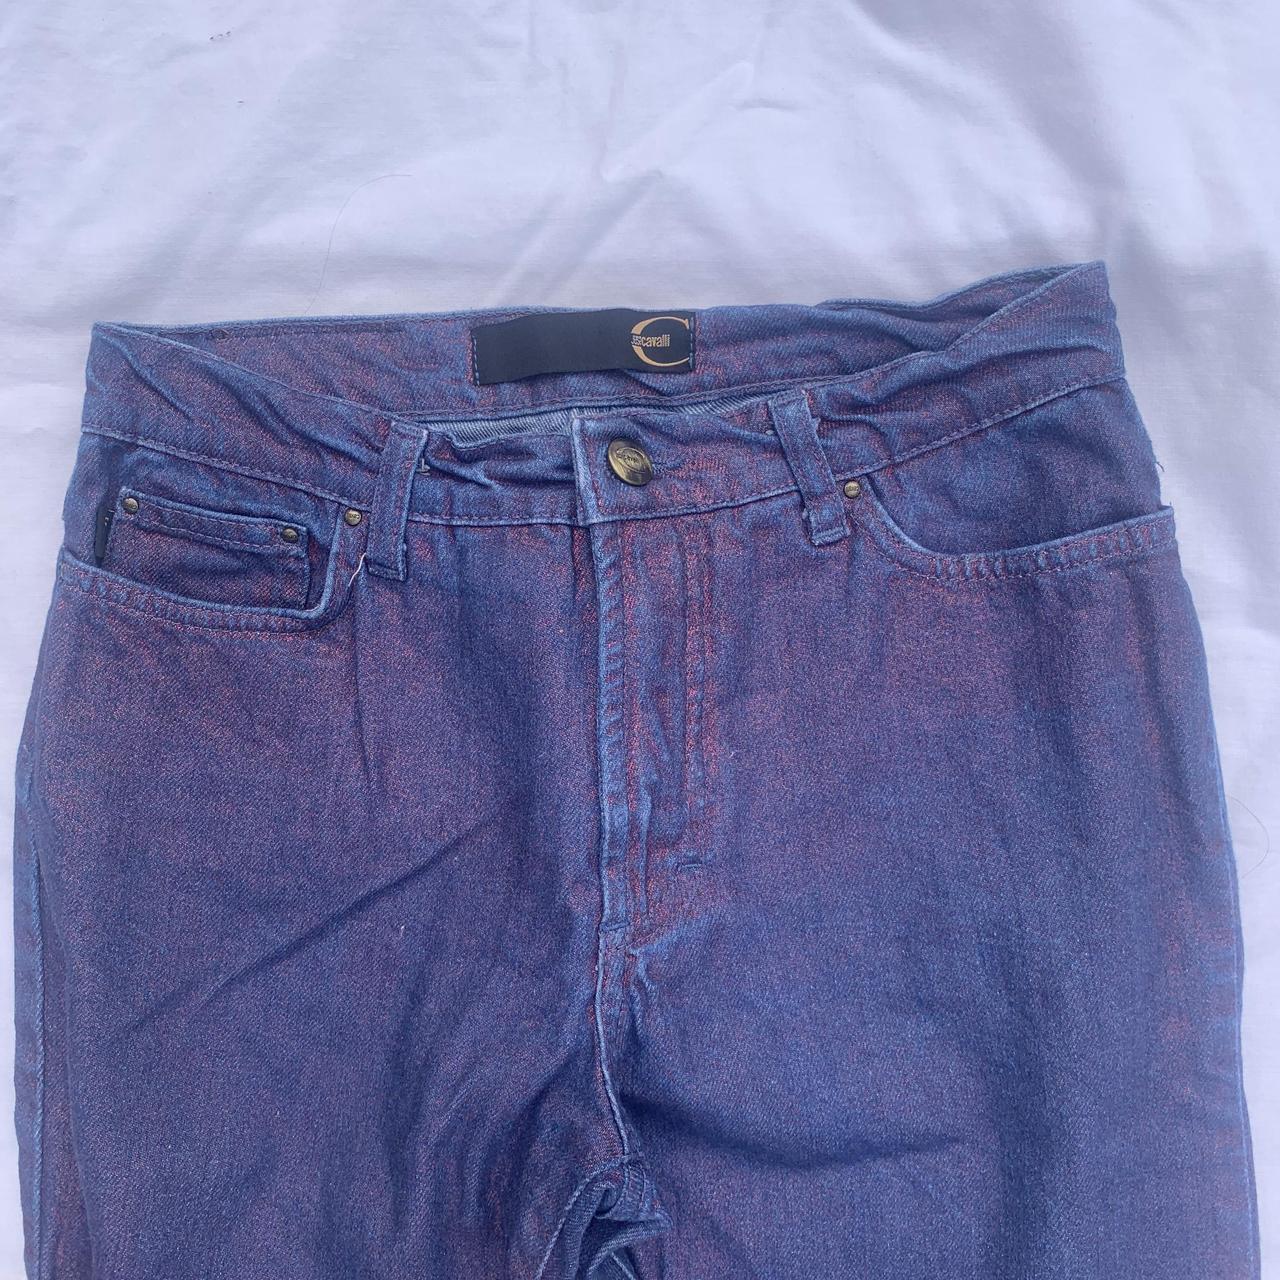 Amazing Robert Cavalli Jeans iridescent purple and... - Depop